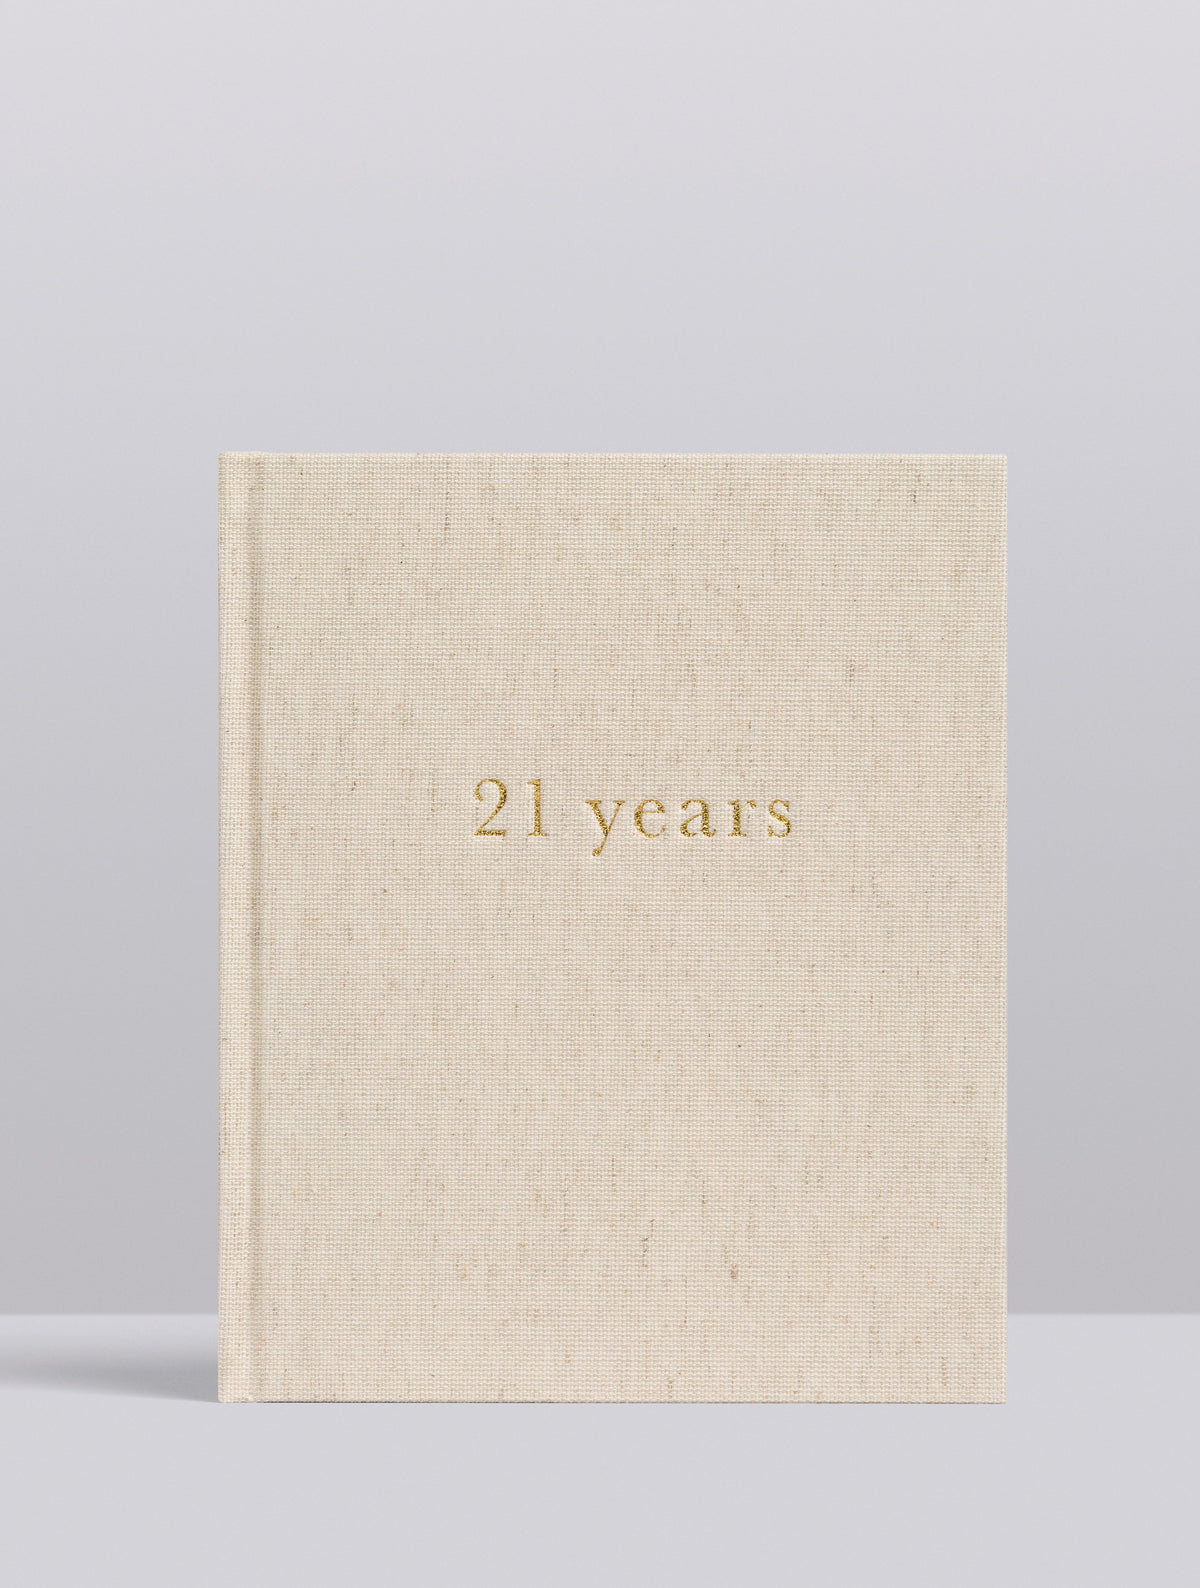 21 Years. 21 Years Of You. Oatmeal